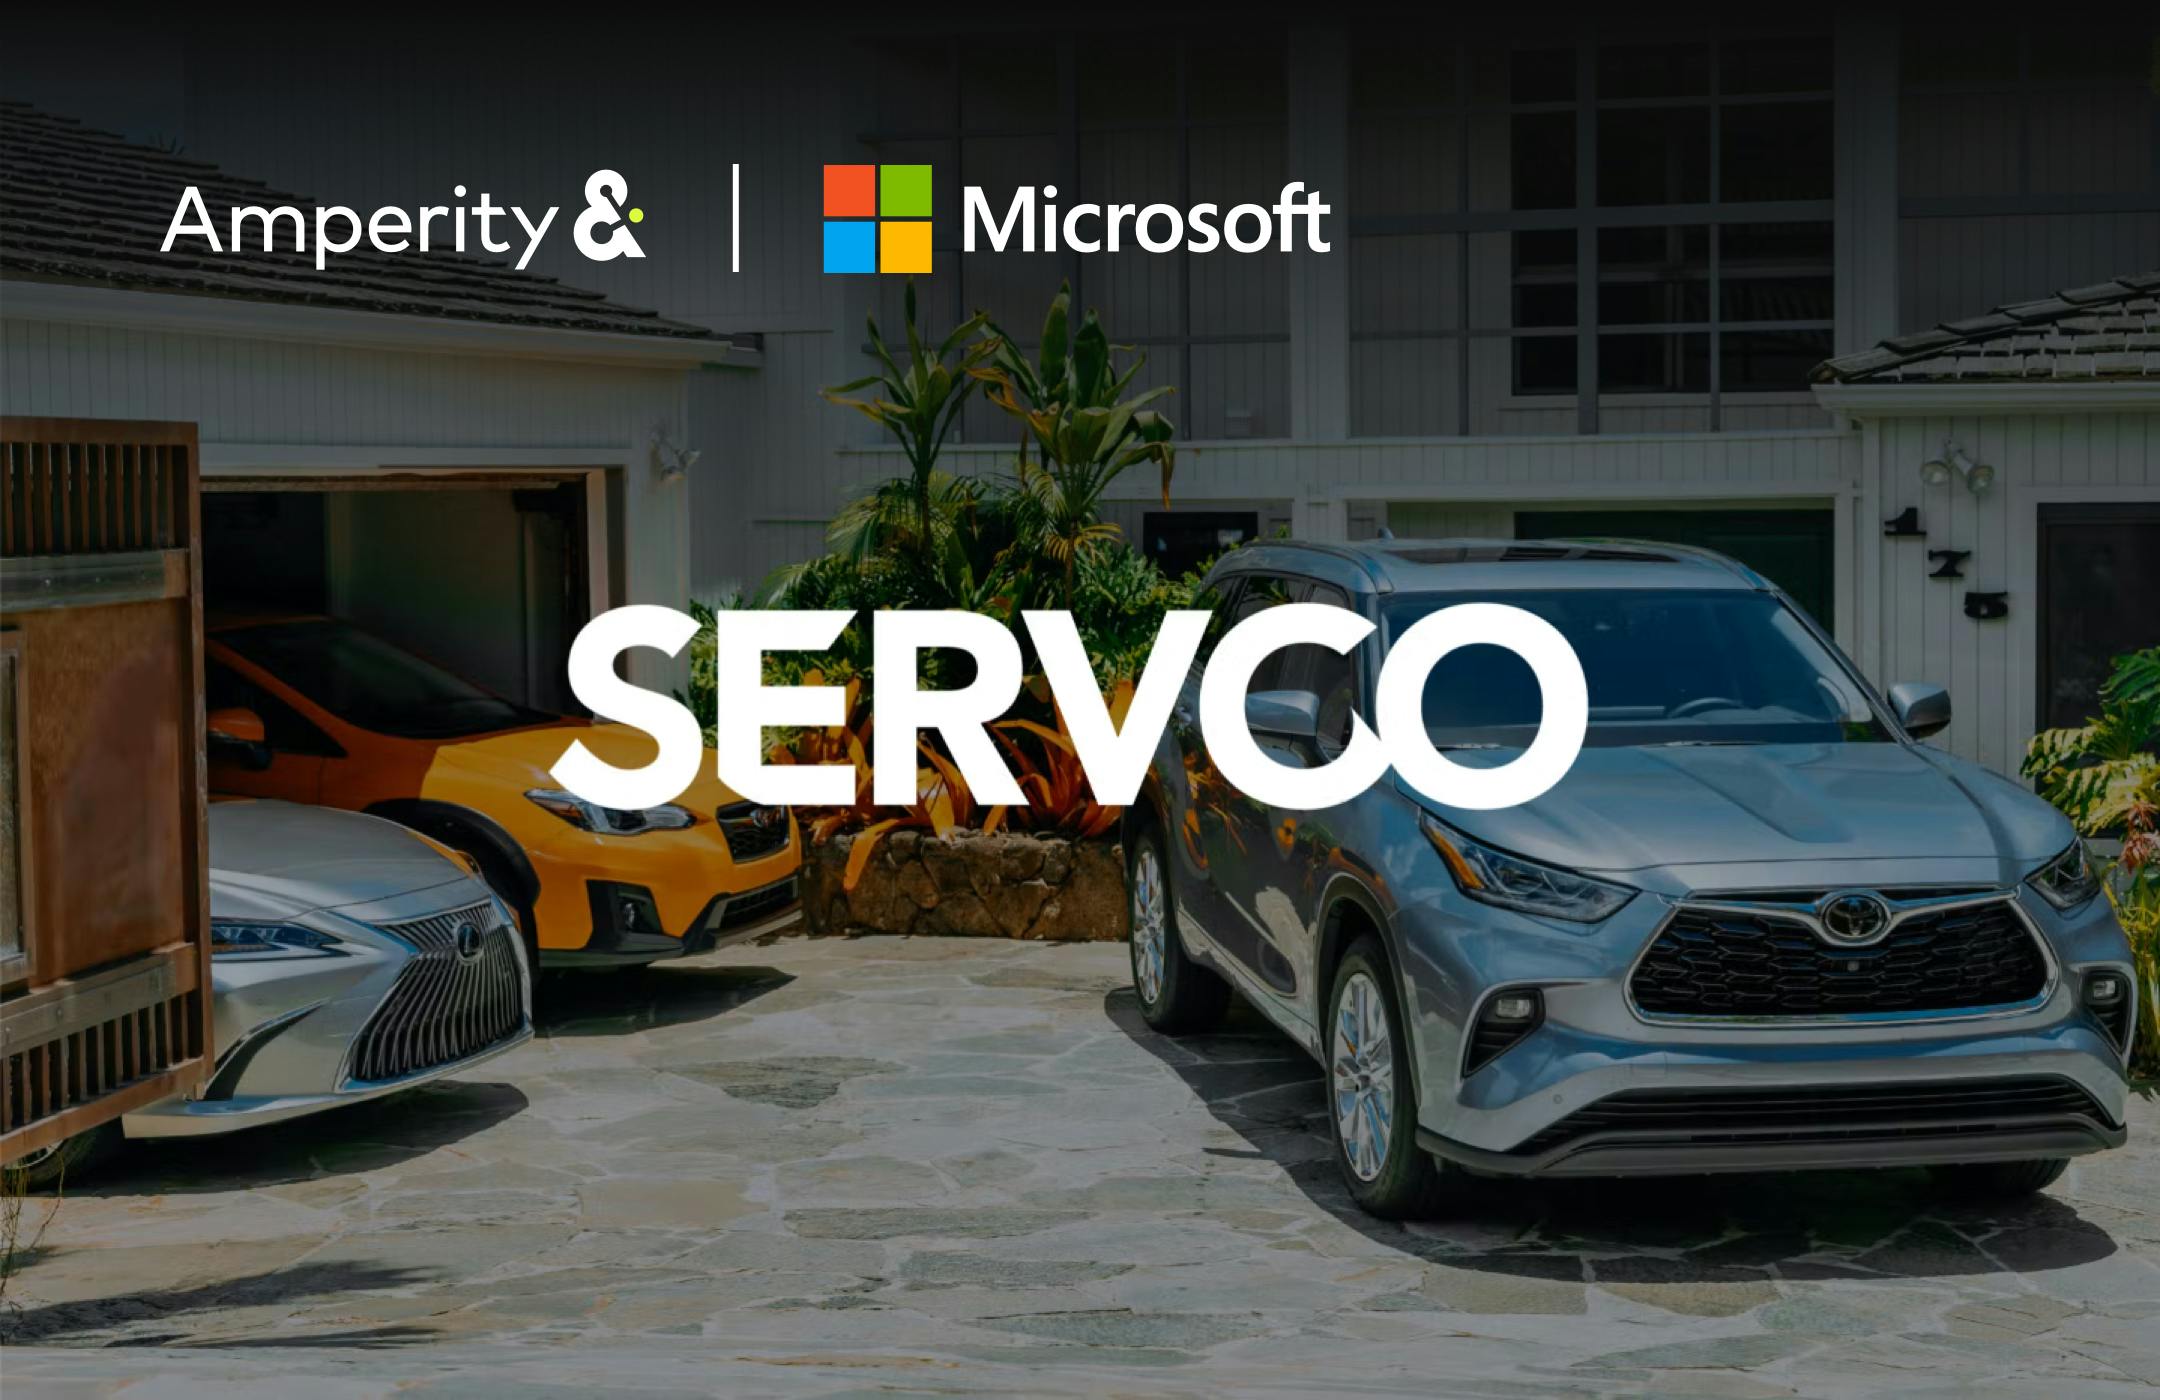 Amperity & Microsoft Case Study: Servco